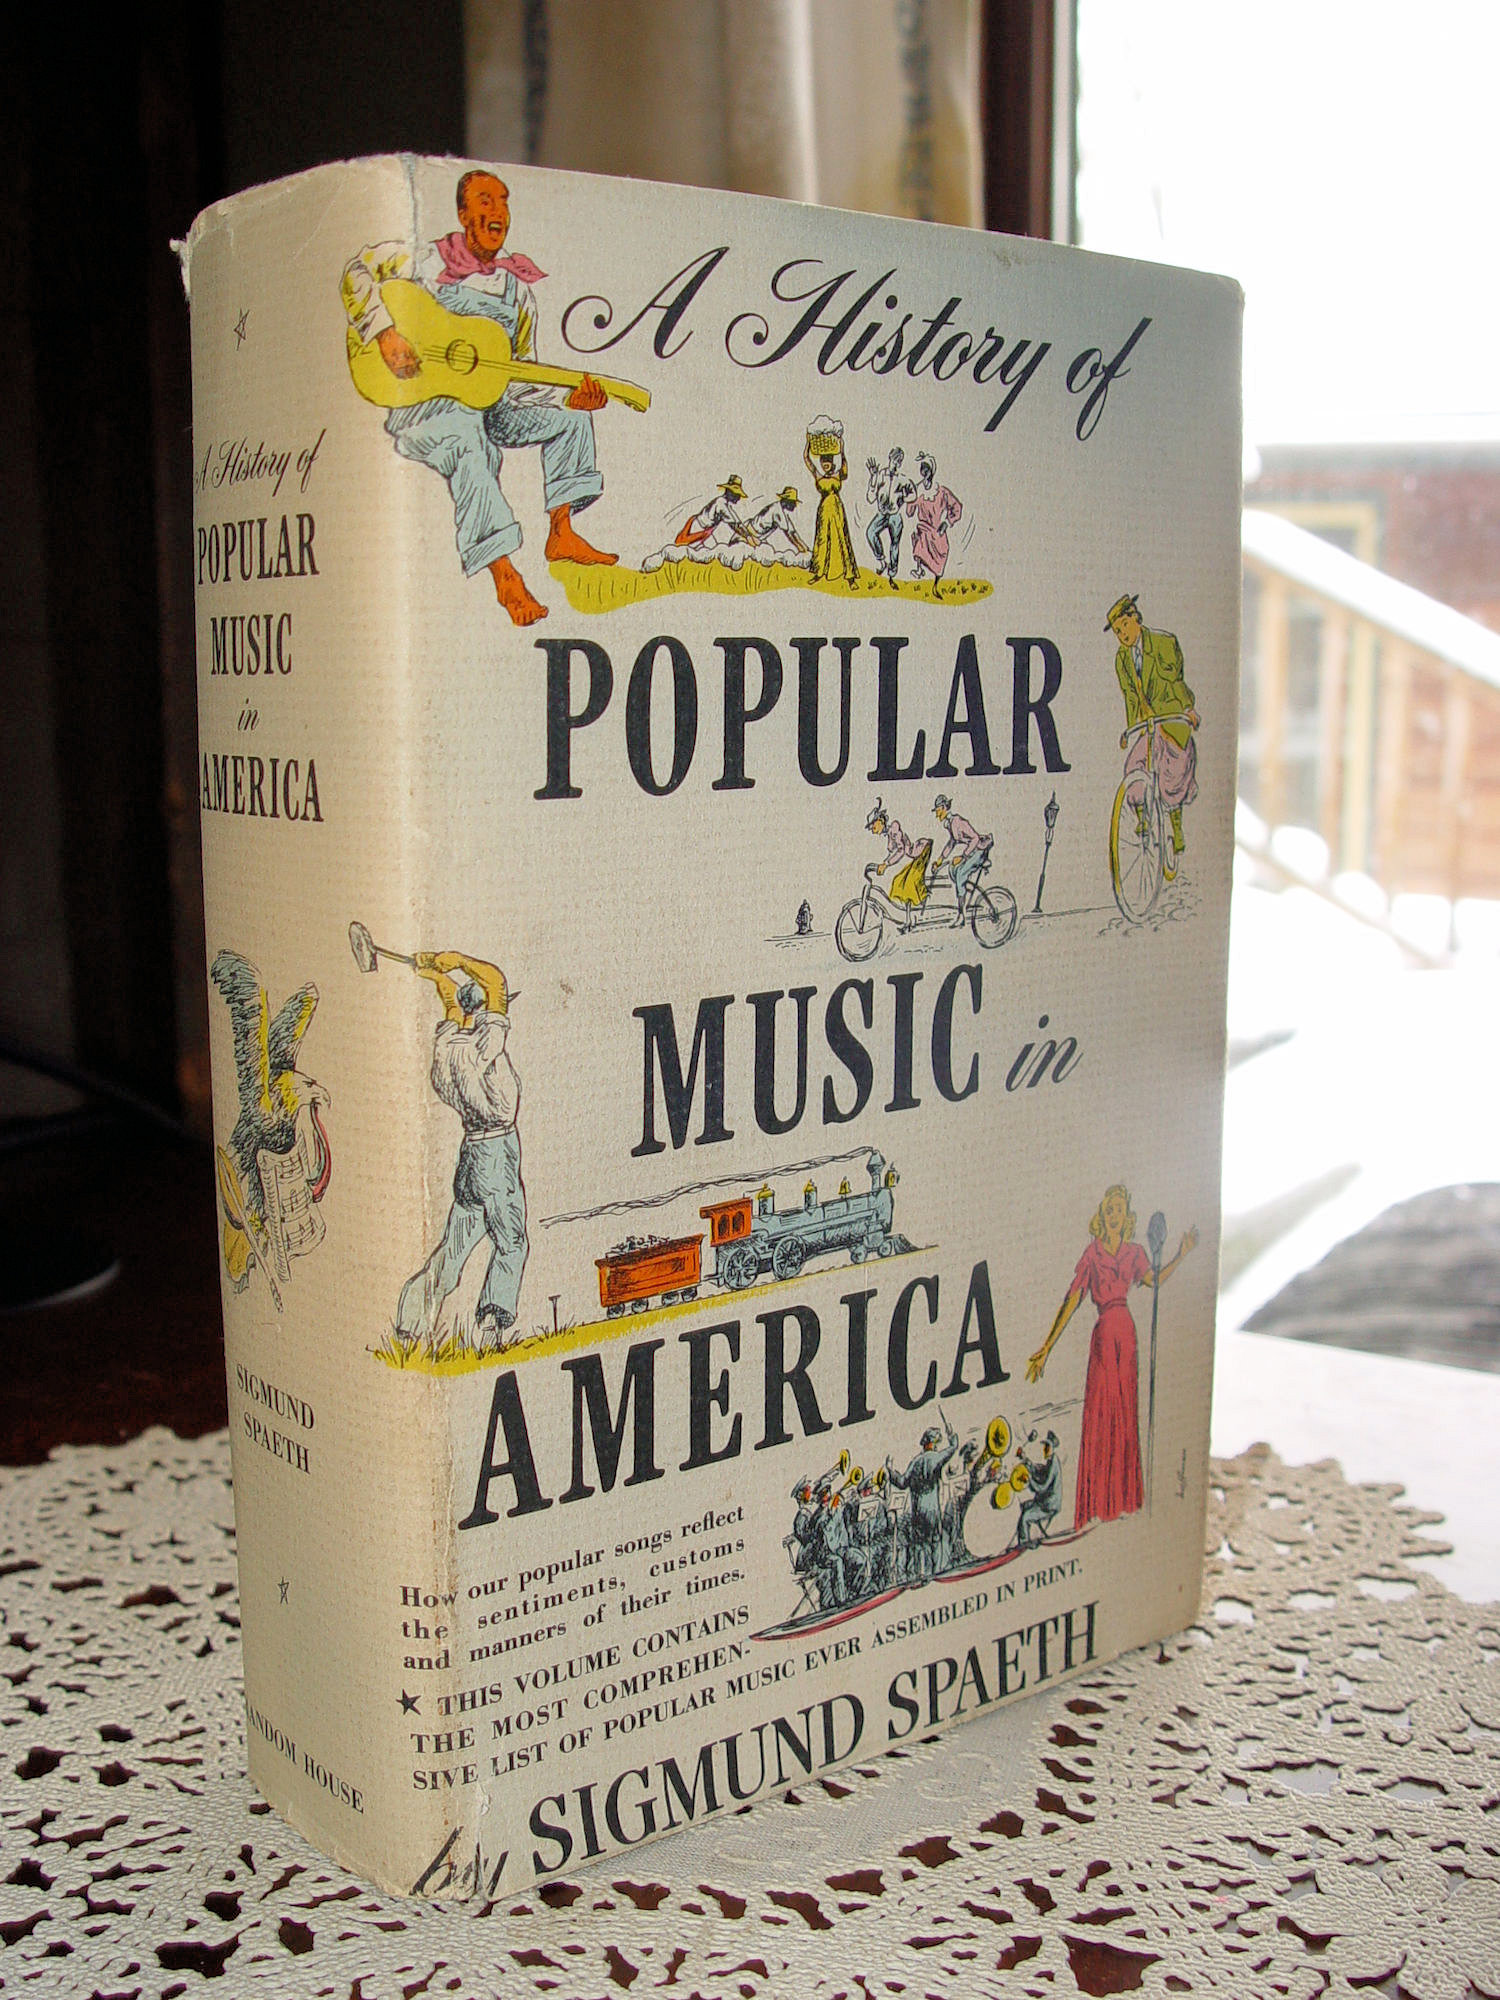 A History of Popular Music in America 1958
                        by Sigmund Spaeth